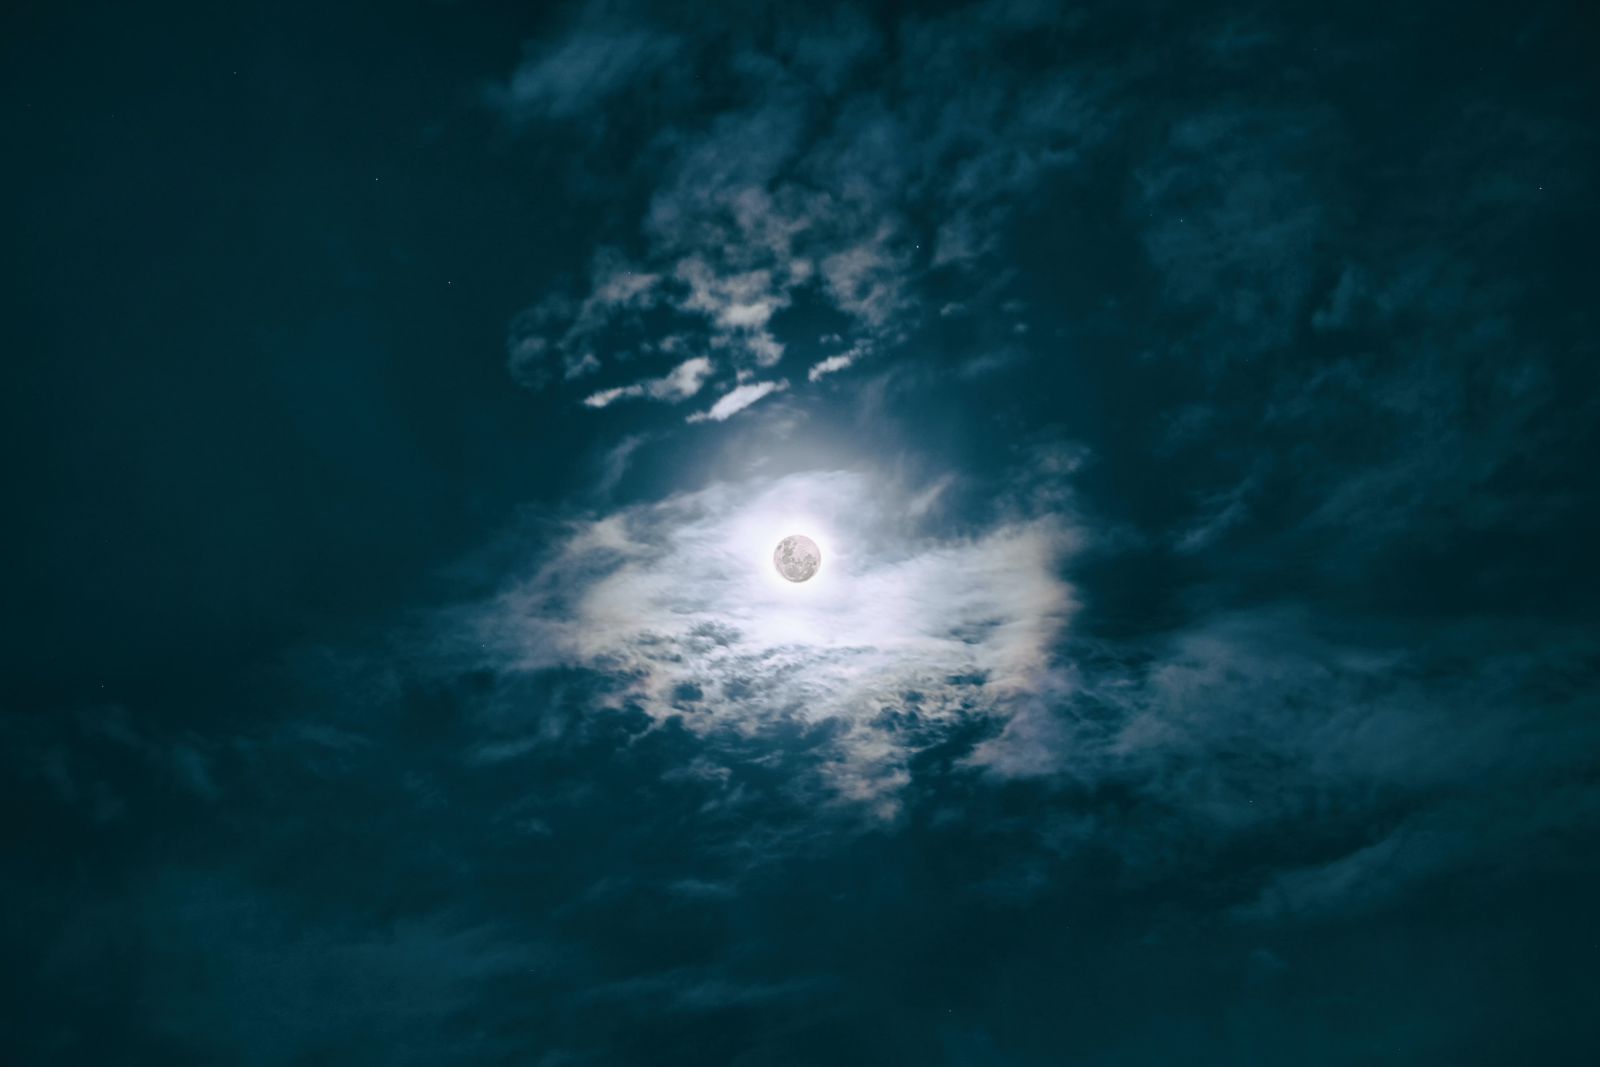 Luz da lua iluminando o céu e as nuvens